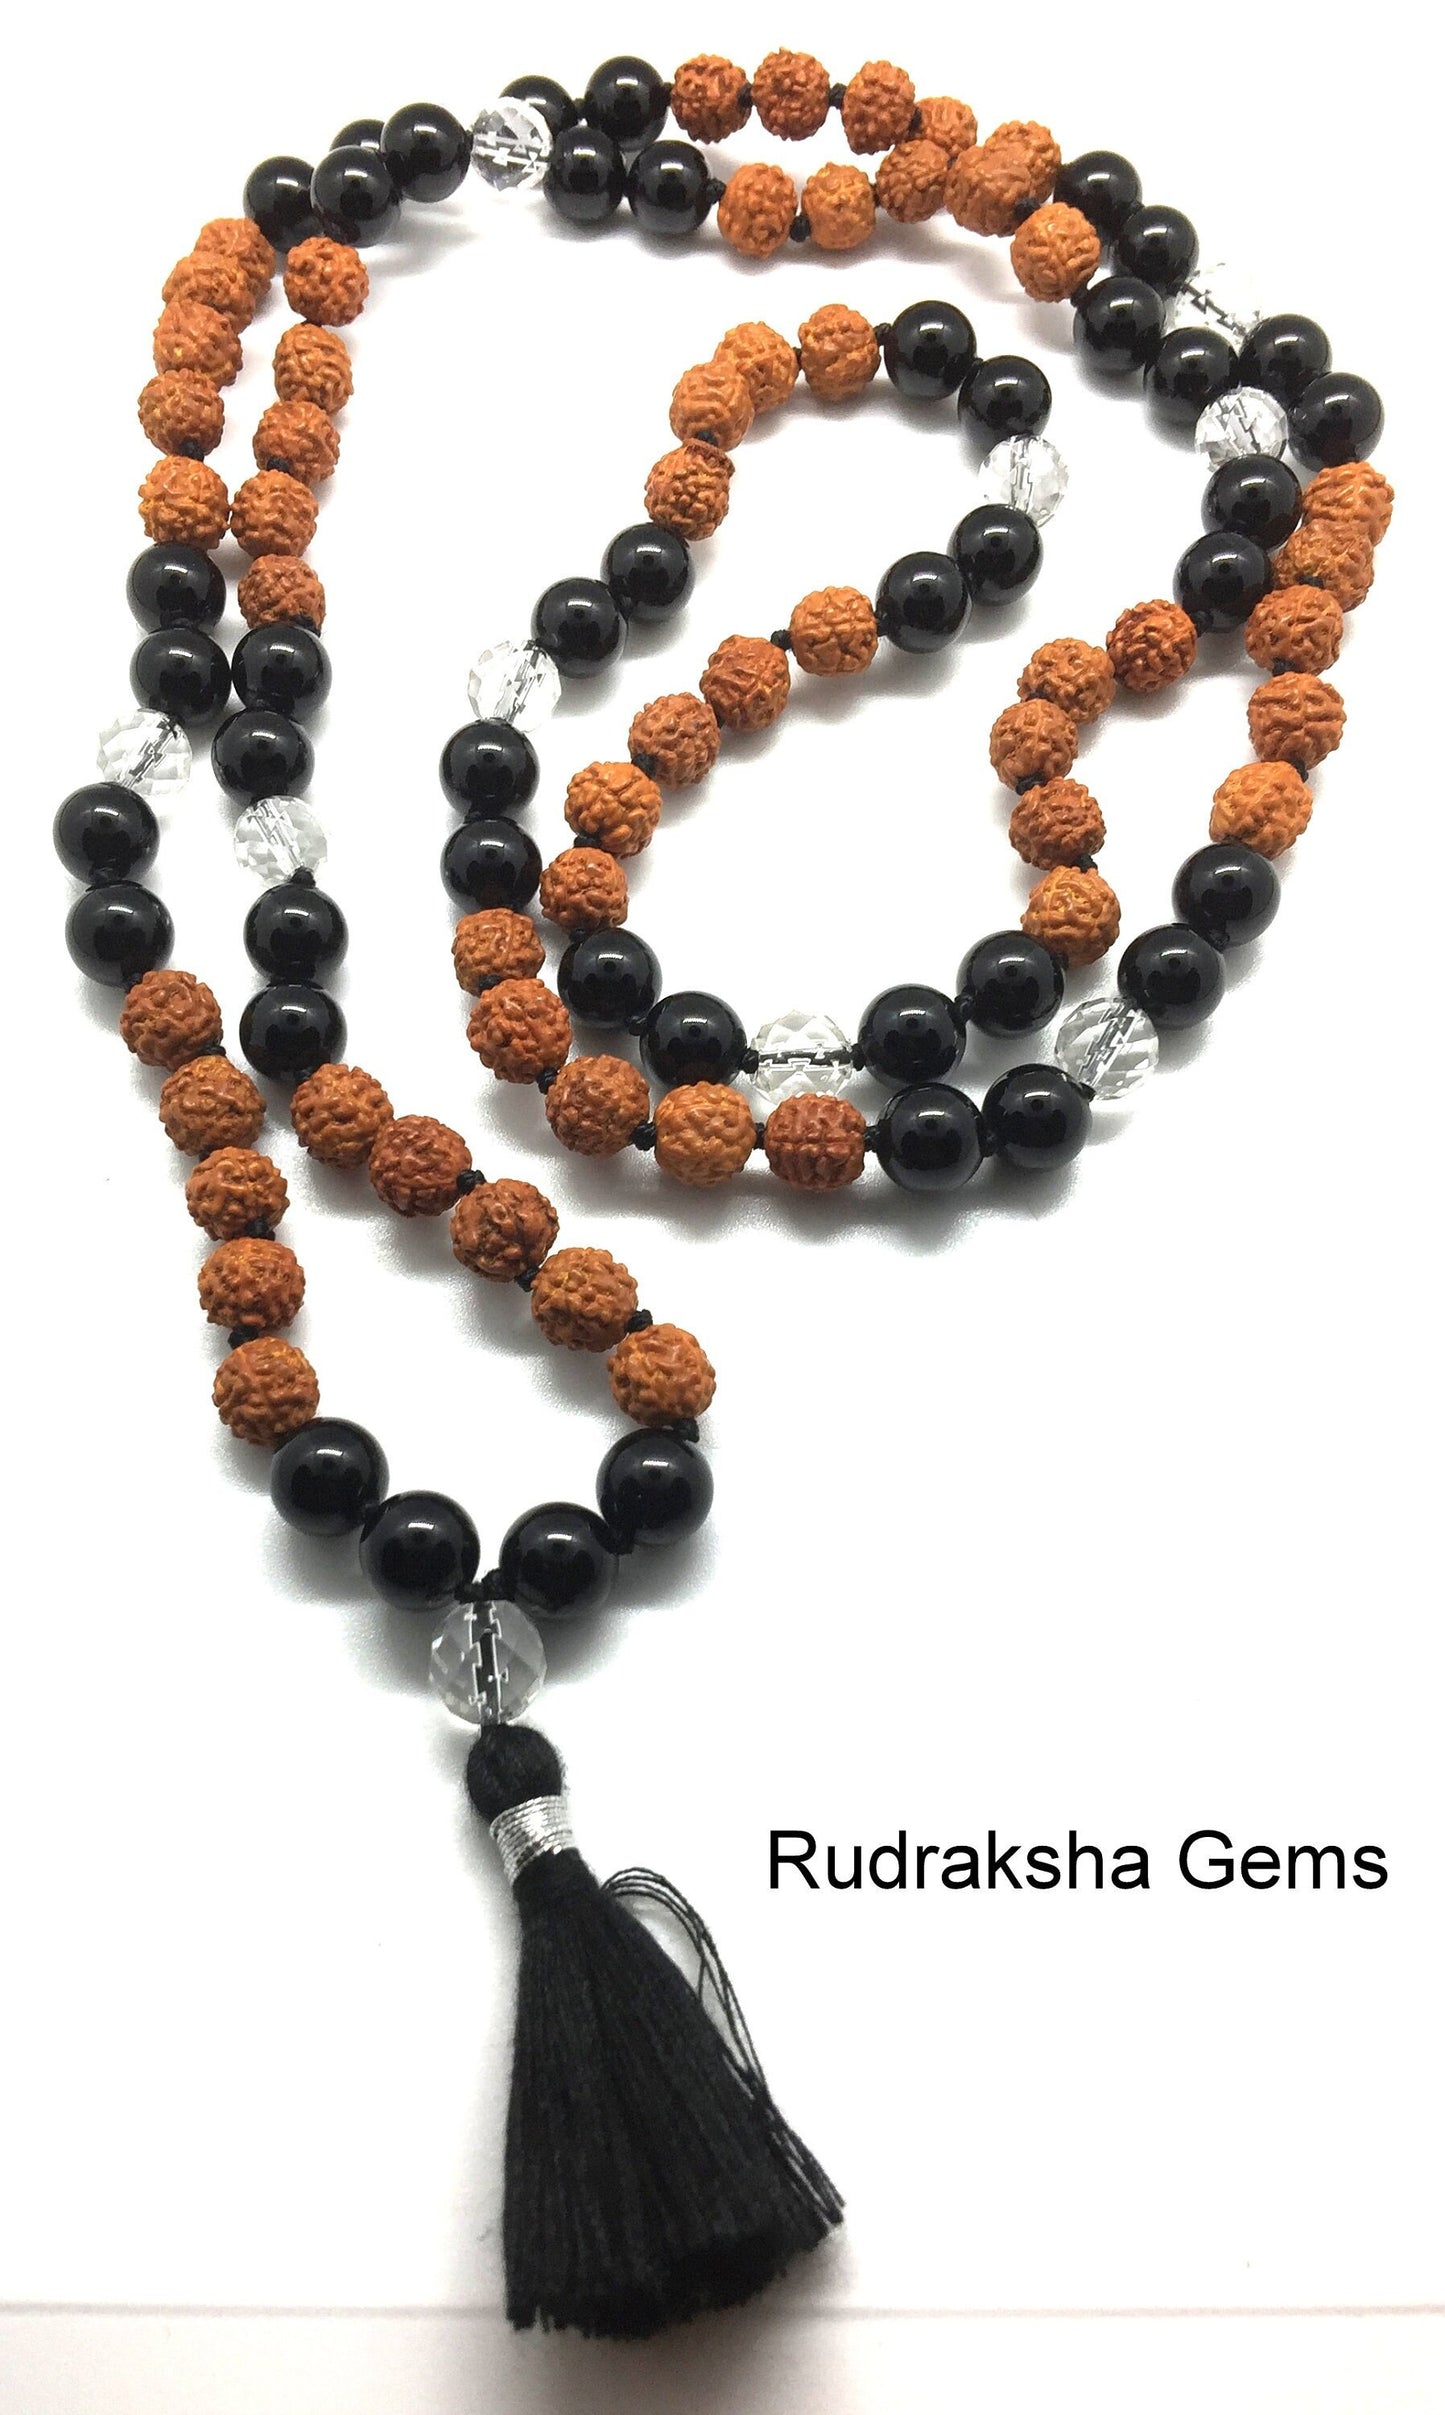 108 Rudraksha Mala Beaded Necklace, Mala Bead Necklace +Crystal Black Onyx Gemstones, Tibetan Buddhist Prayer Beads, Healing Meditation Yoga